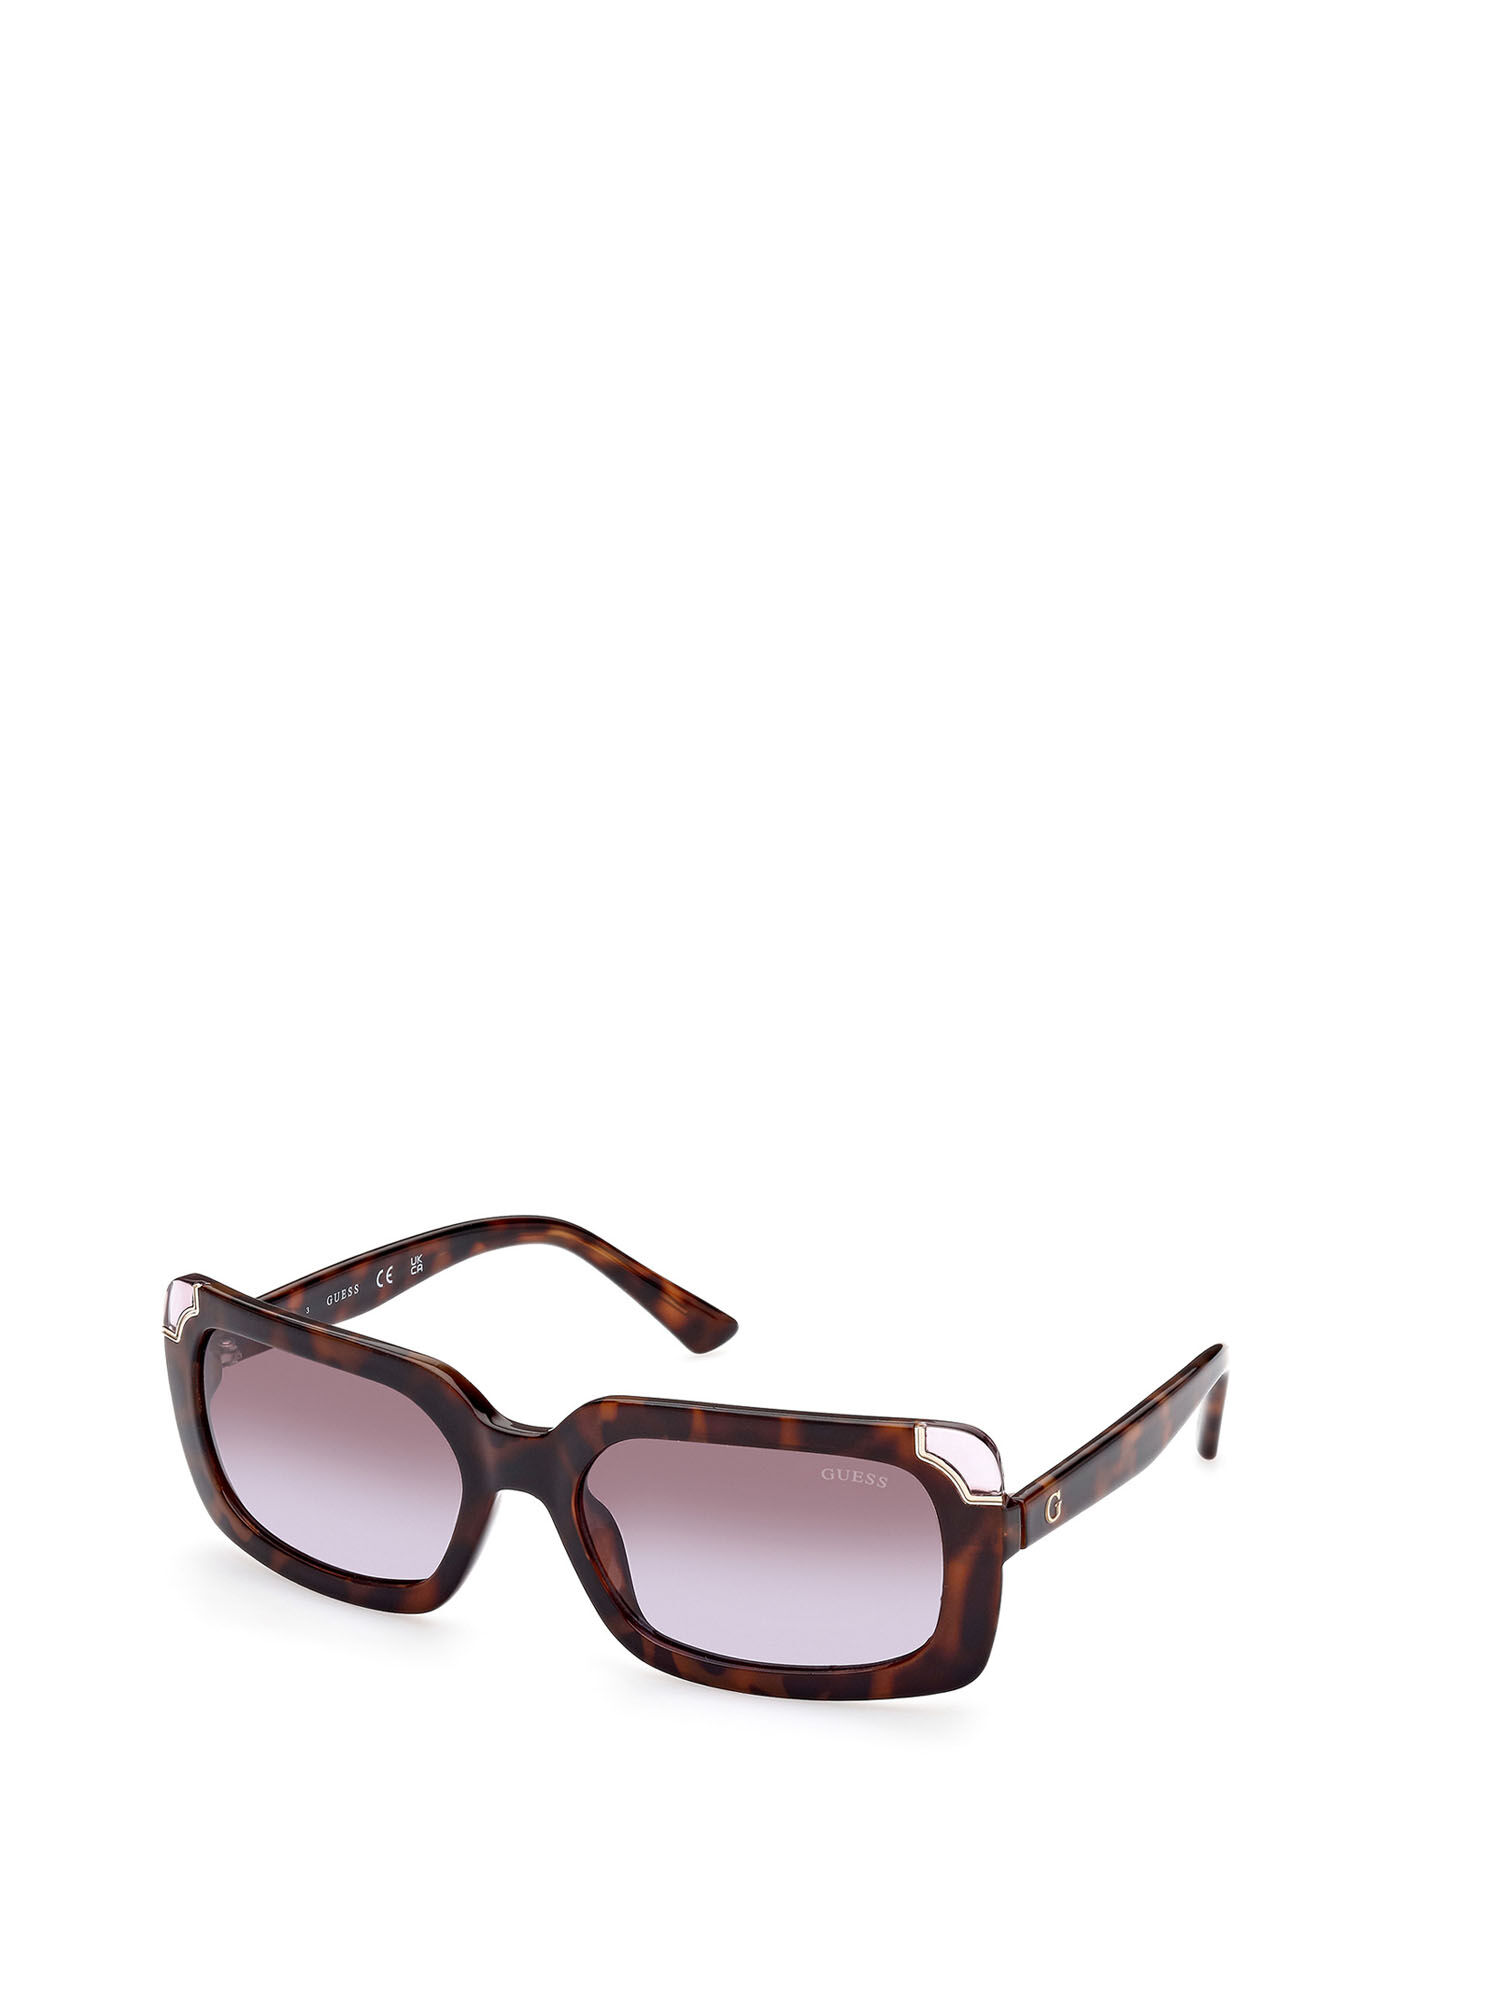 Doreen sunglasses | Glasses for your face shape, Guess sunglasses, Cheap  oakley sunglasses